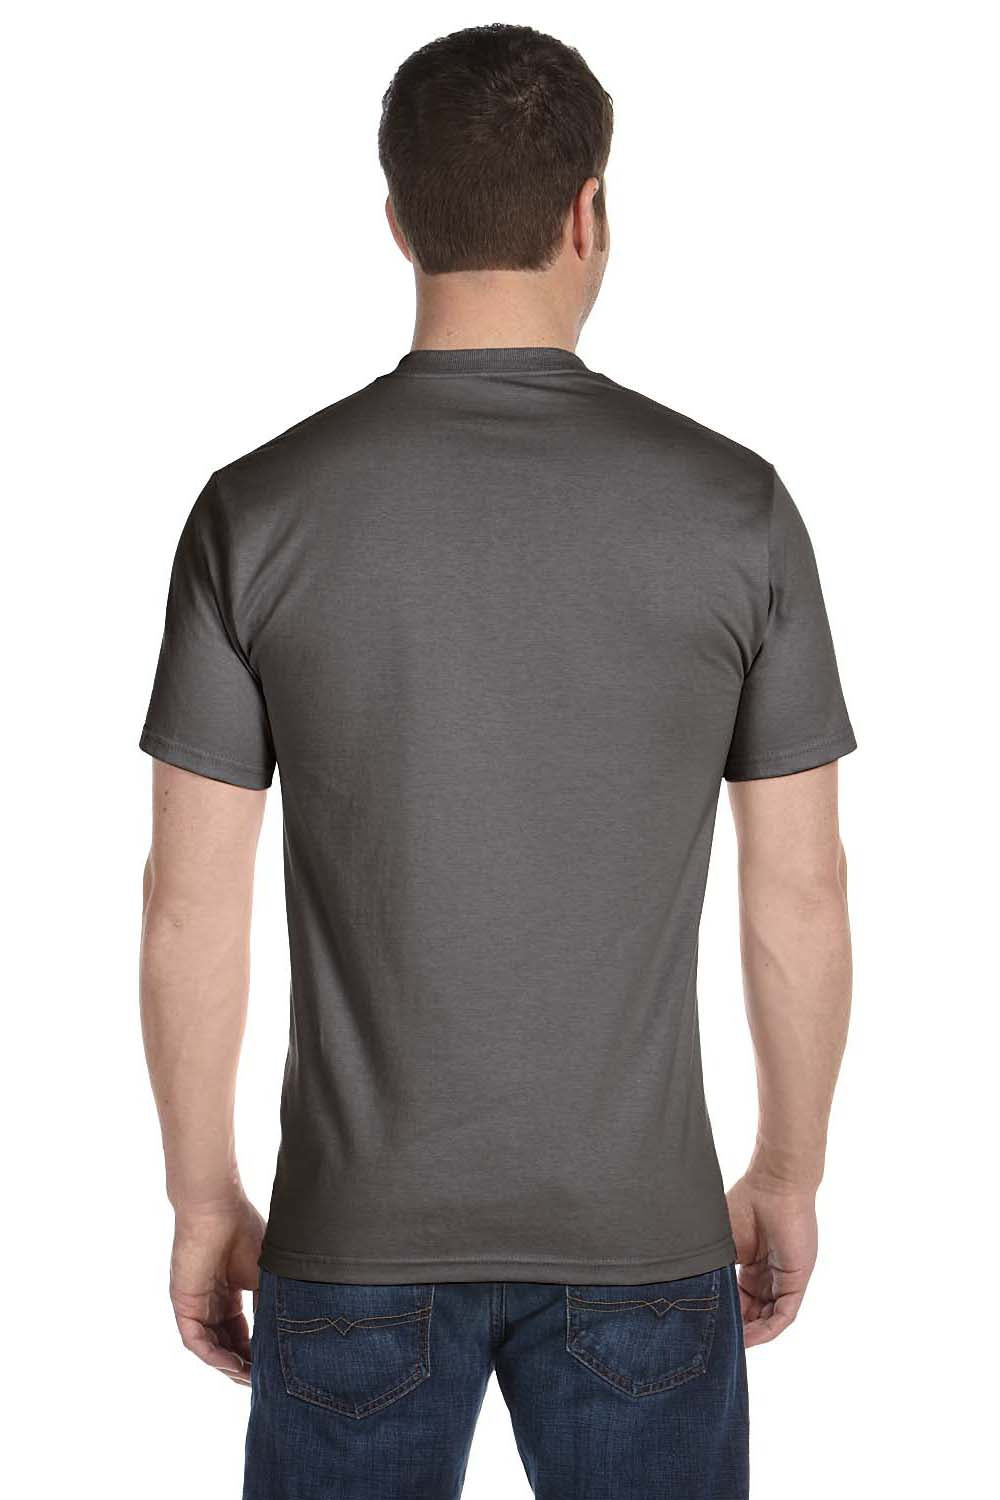 Hanes 5180 Mens Beefy-T Short Sleeve Crewneck T-Shirt Smoke Grey Back